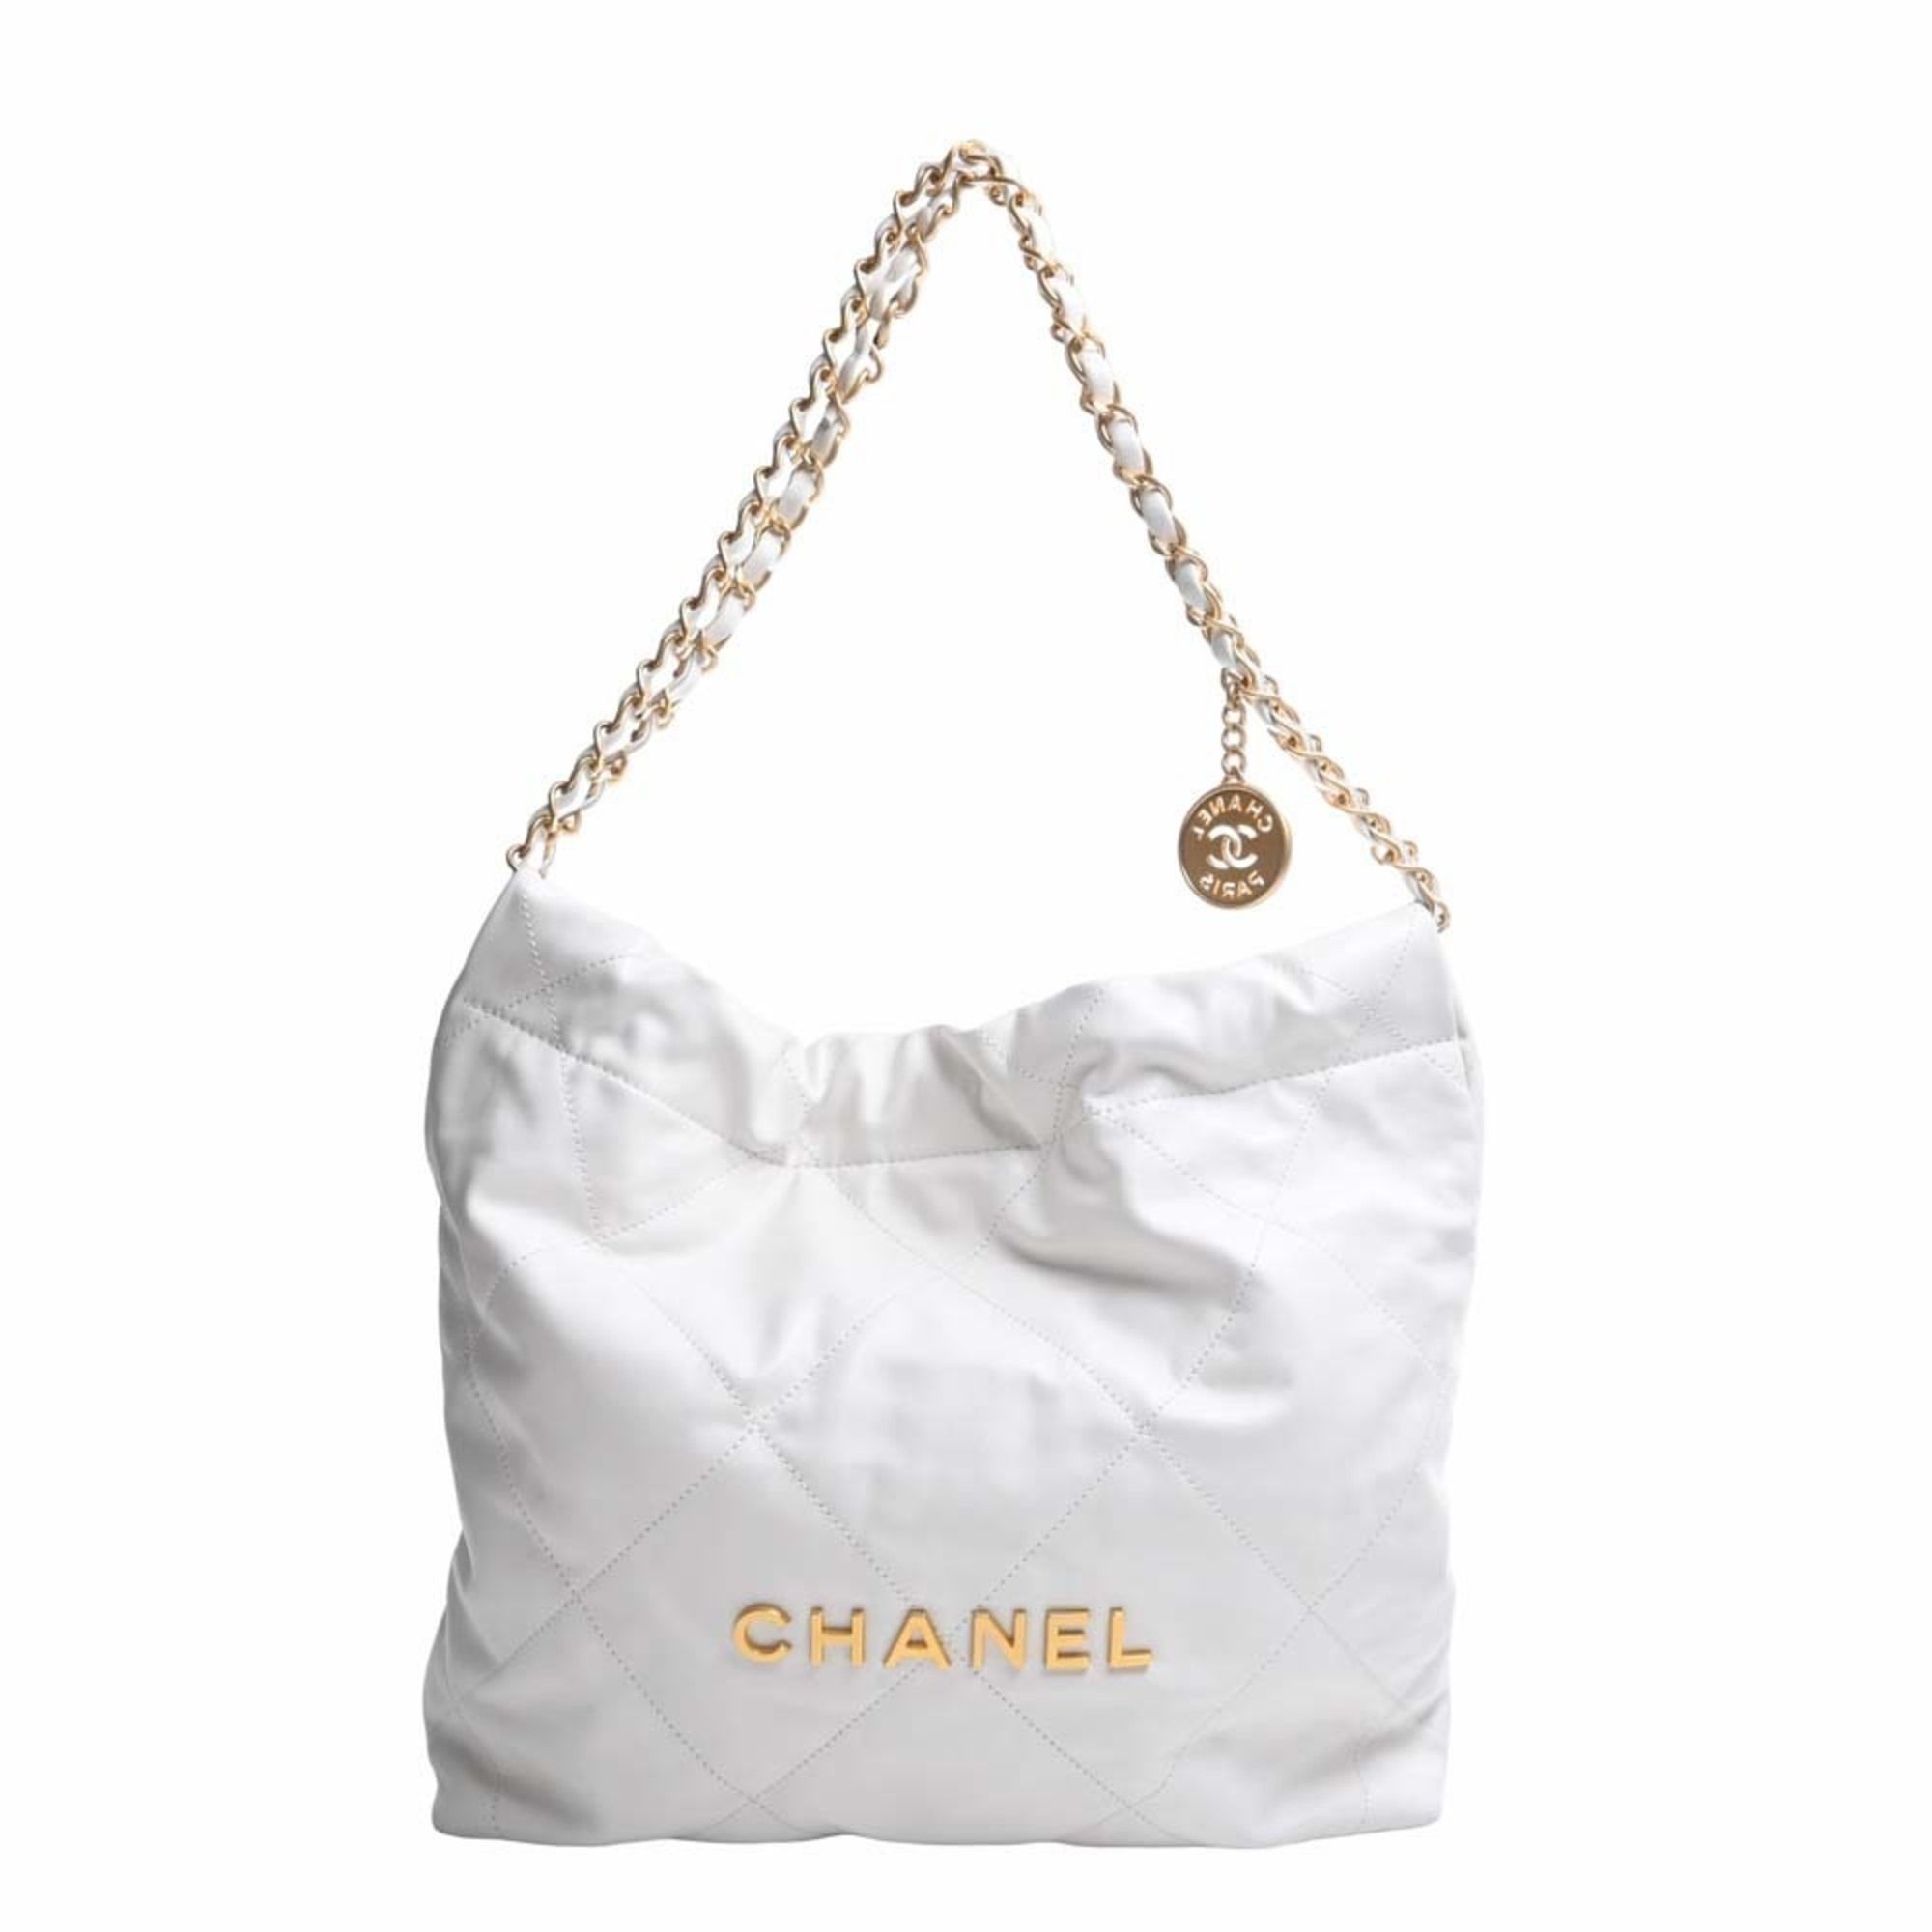 Chanel metallic gold - Gem